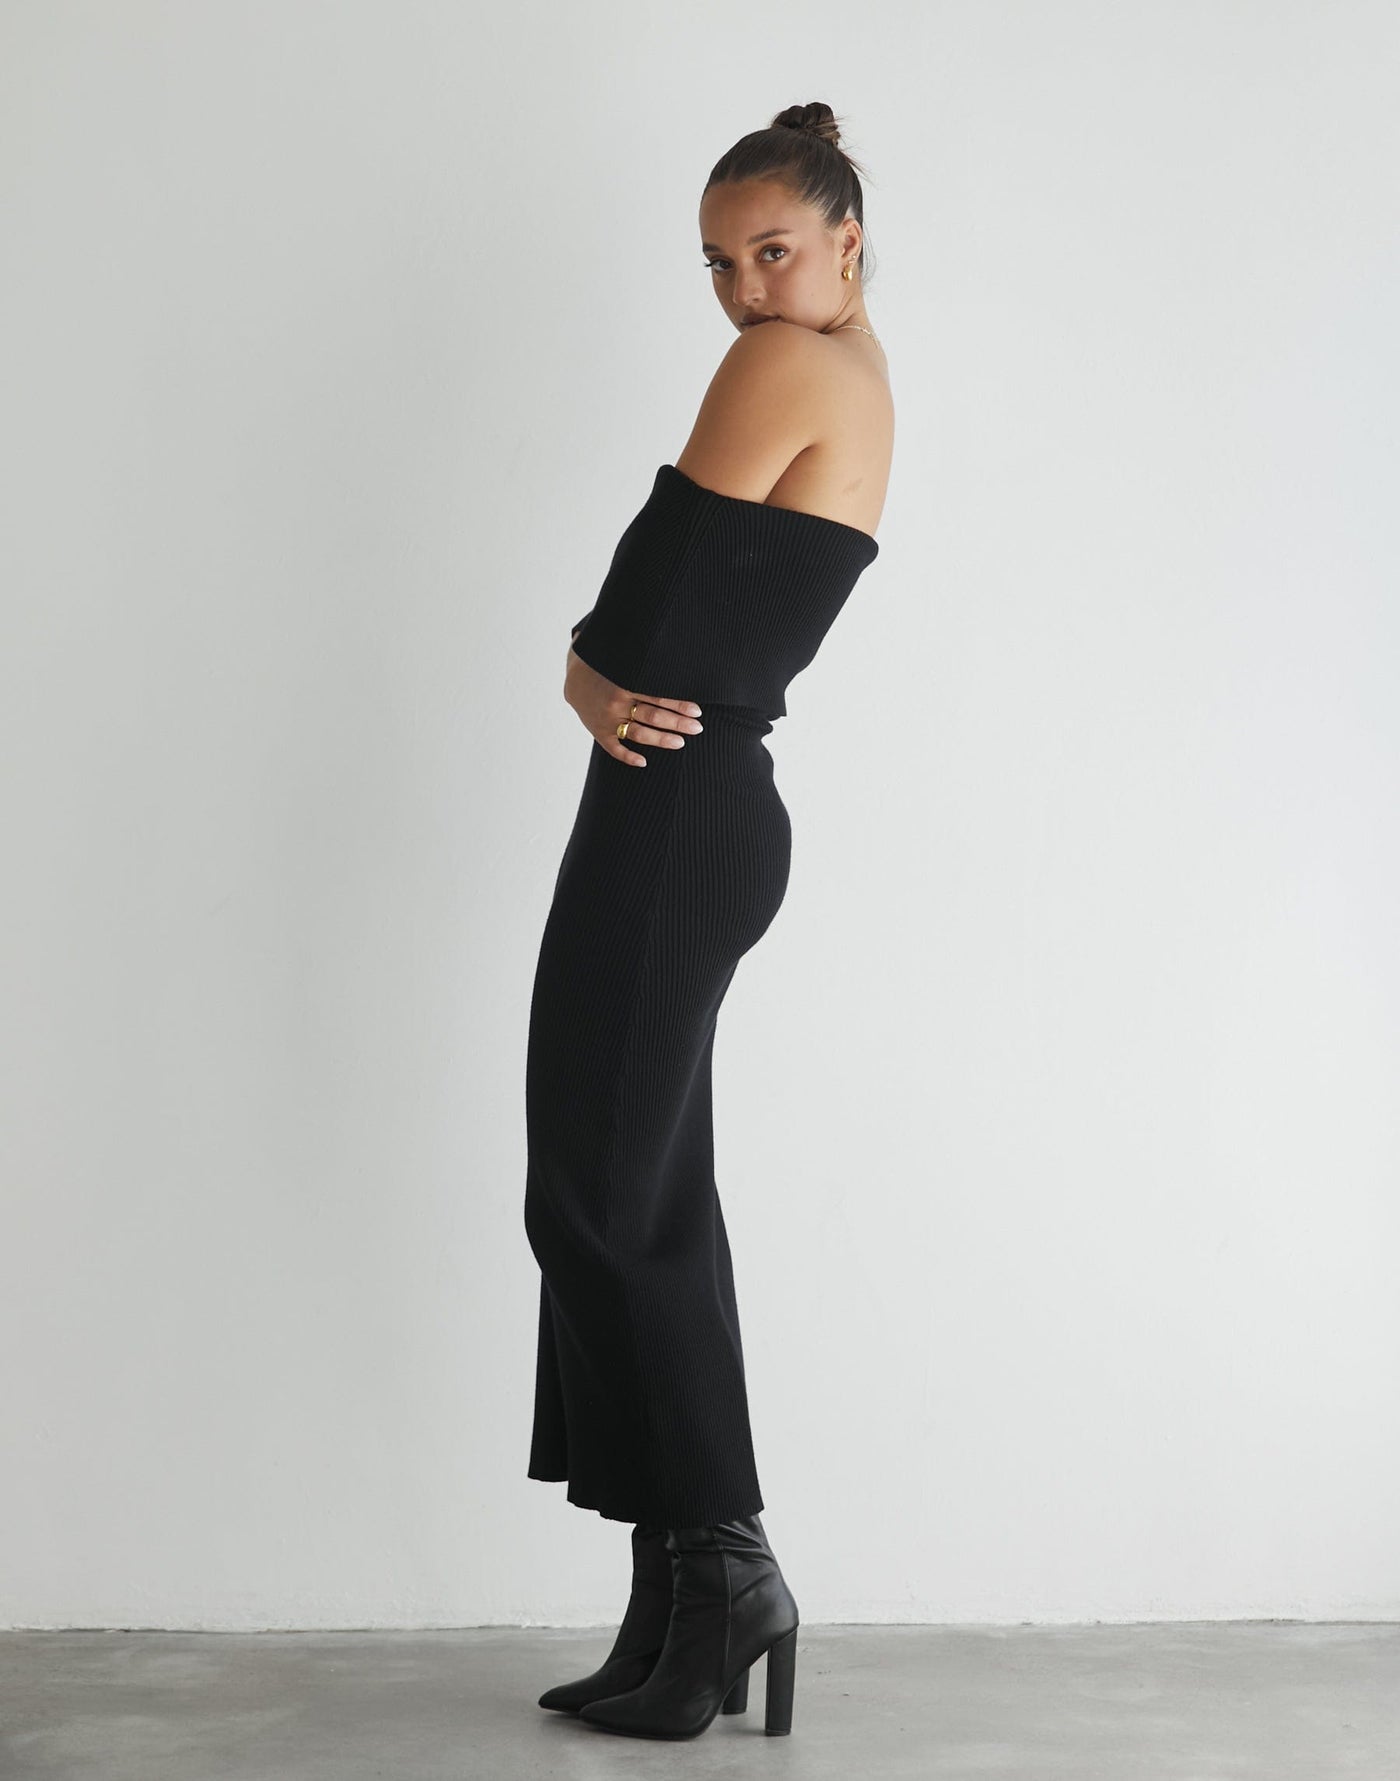 Ambiguity Maxi Dress (Black) - Black Knit Off The Shoulder Maxi Dress - Women's Dress - Charcoal Clothing